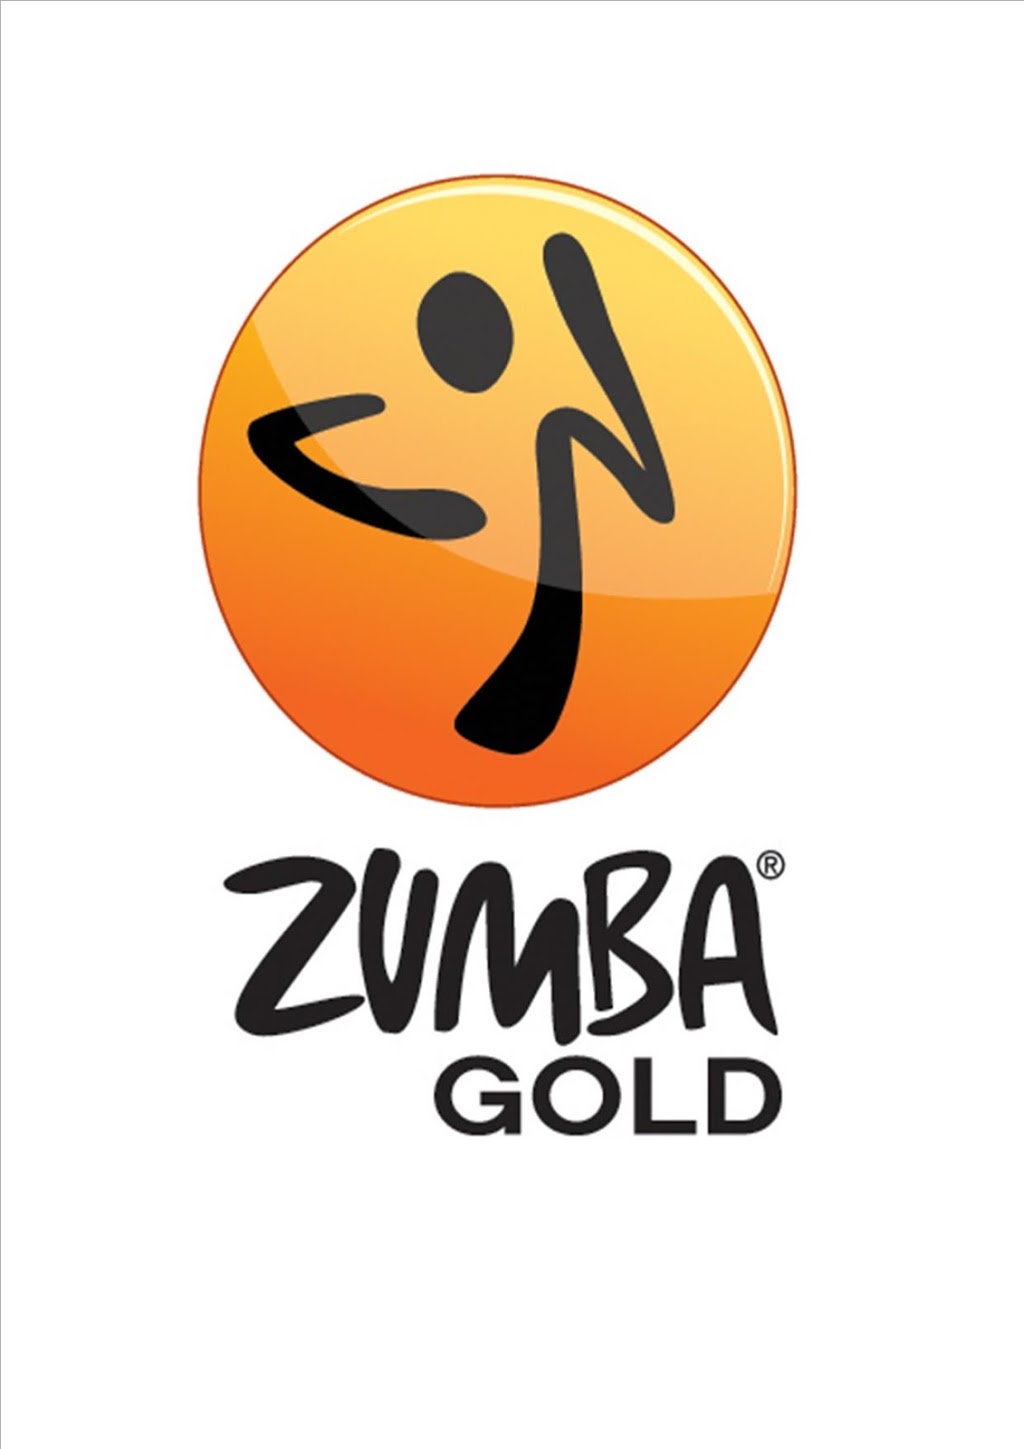 ????‍♀️Zumba Gold With Jane-Fitness Class????‍♀️ | gym | 11 MacDonald Ave, Padbury WA 6025, Australia | 0404500055 OR +61 404 500 055